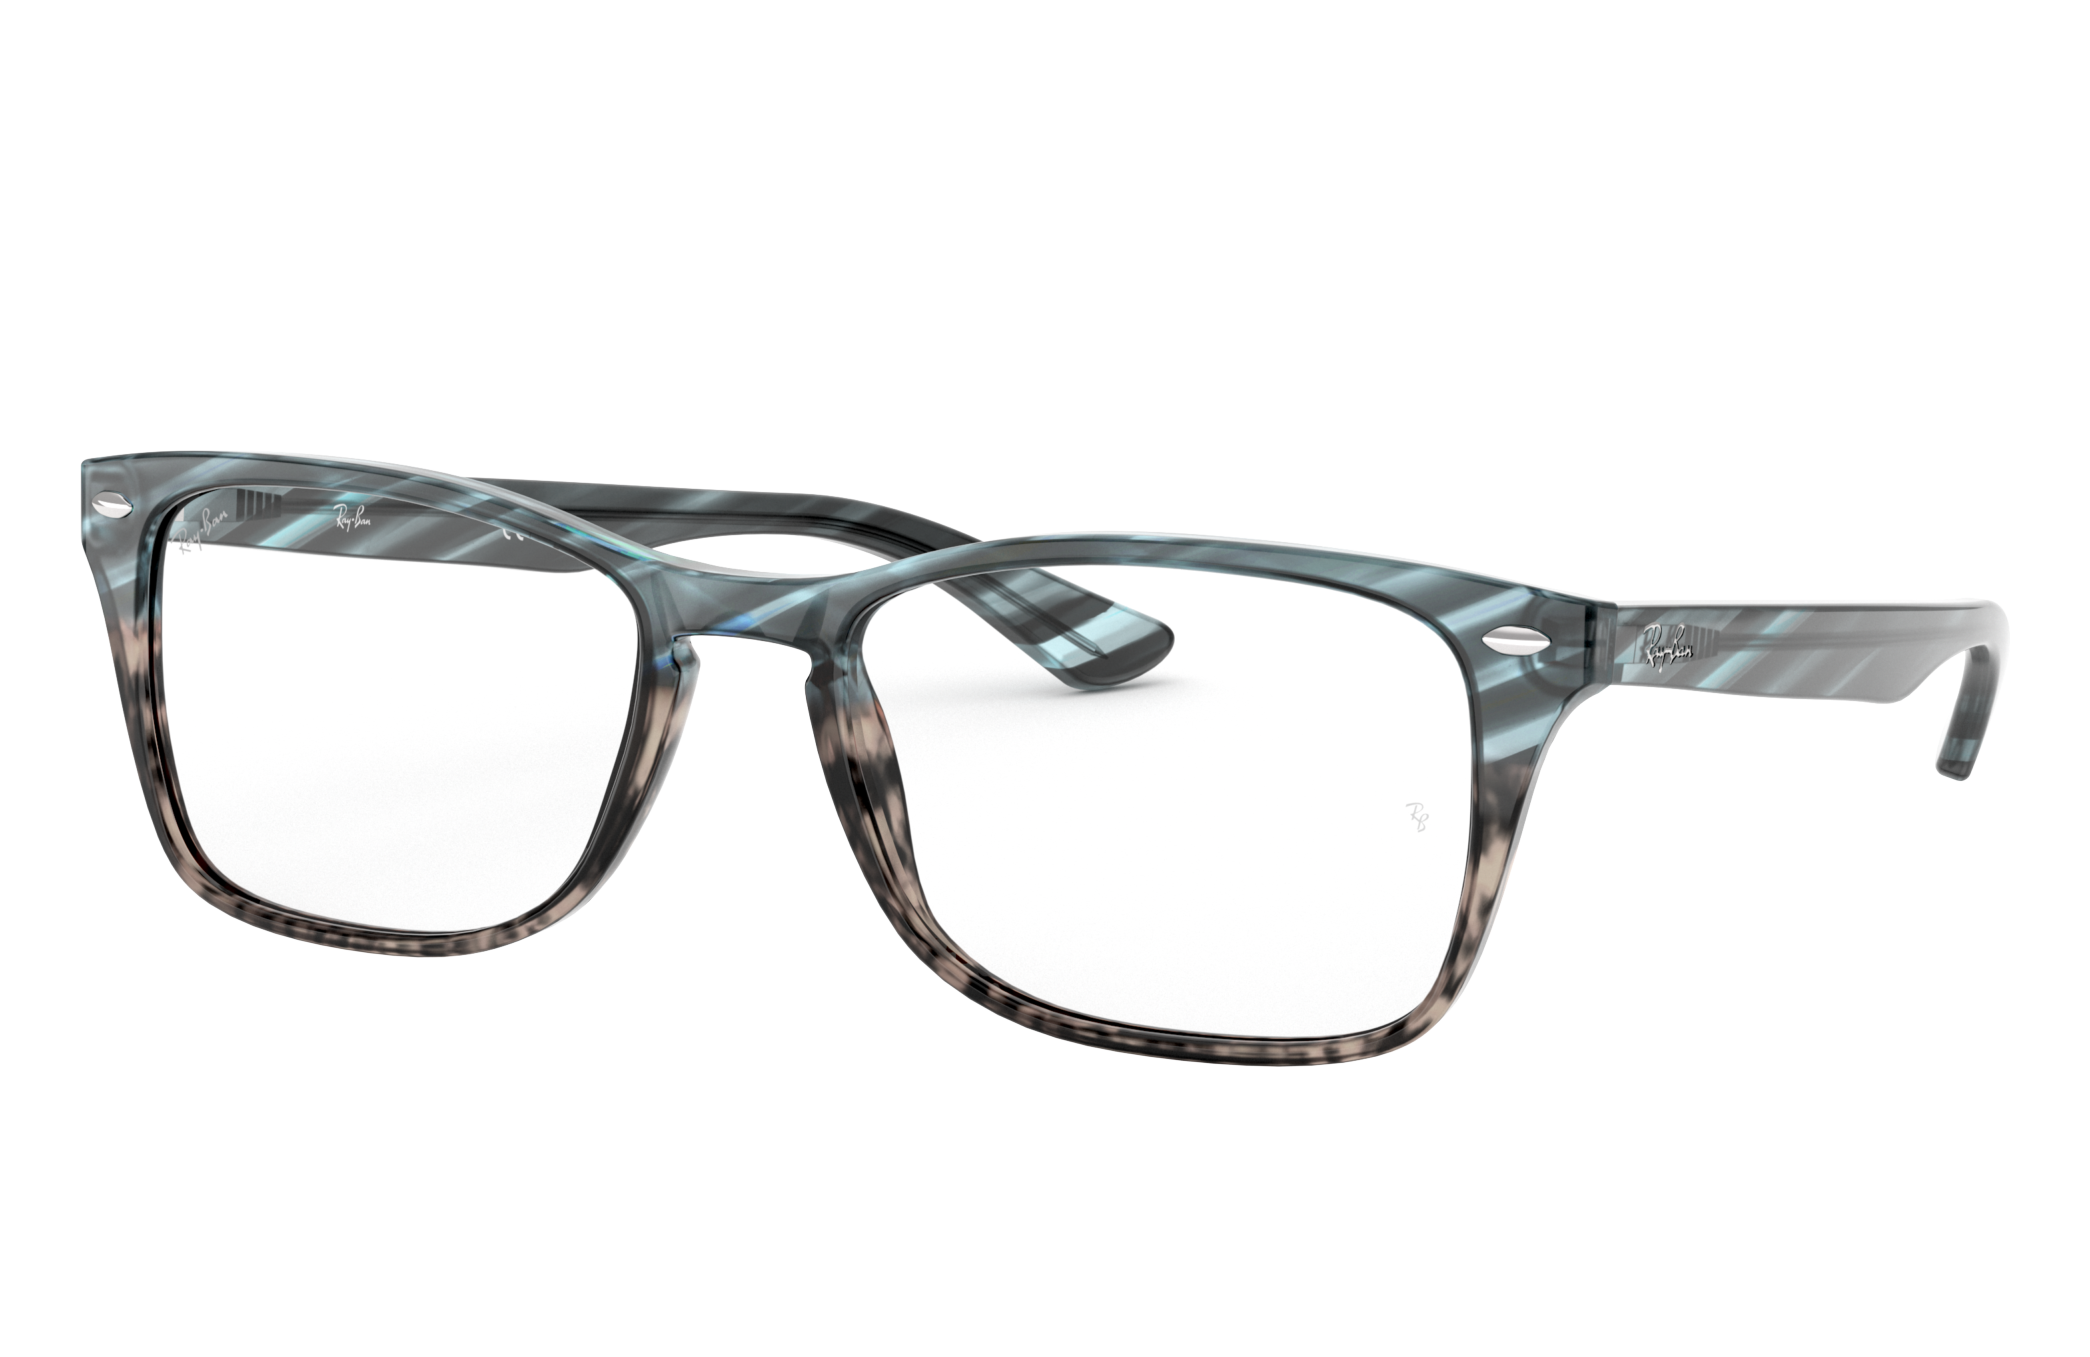 Rb5228m Optics Eyeglasses with Striped Grey Frame Ray-Ban®